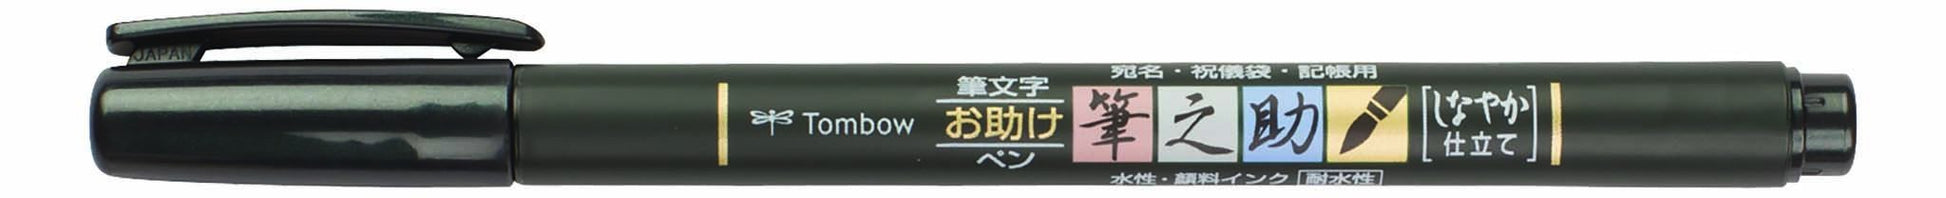 Tombow Fudenosuke Soft Tip Brush Pen - Black - Create A Little Magic (Pty) Ltd